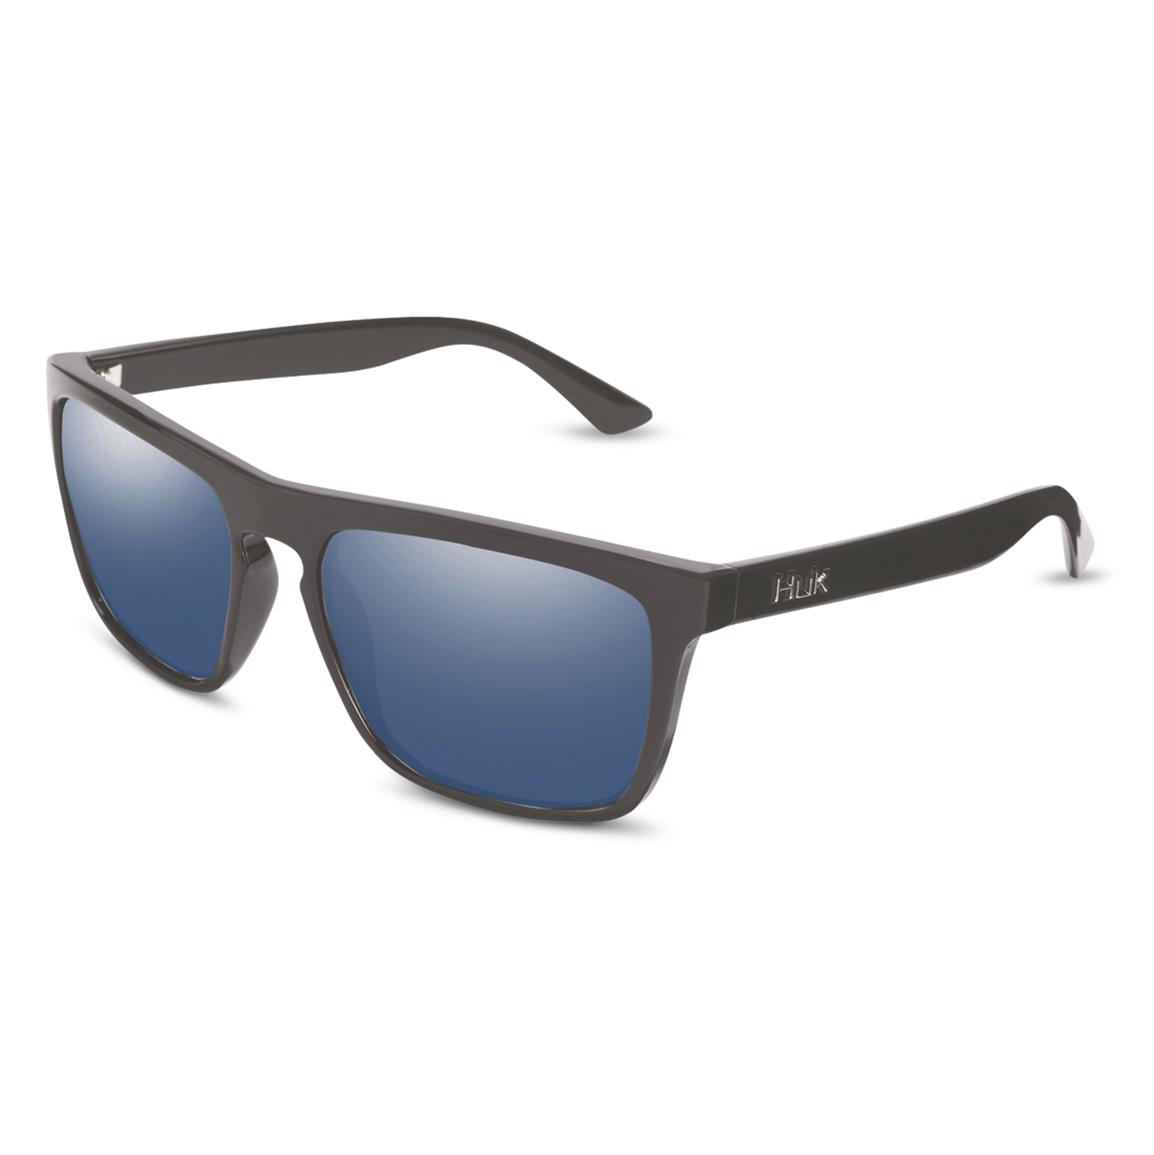 Huk Men's Siwash Polarized Sunglasses, Matte Black/smoke/blue Mirror